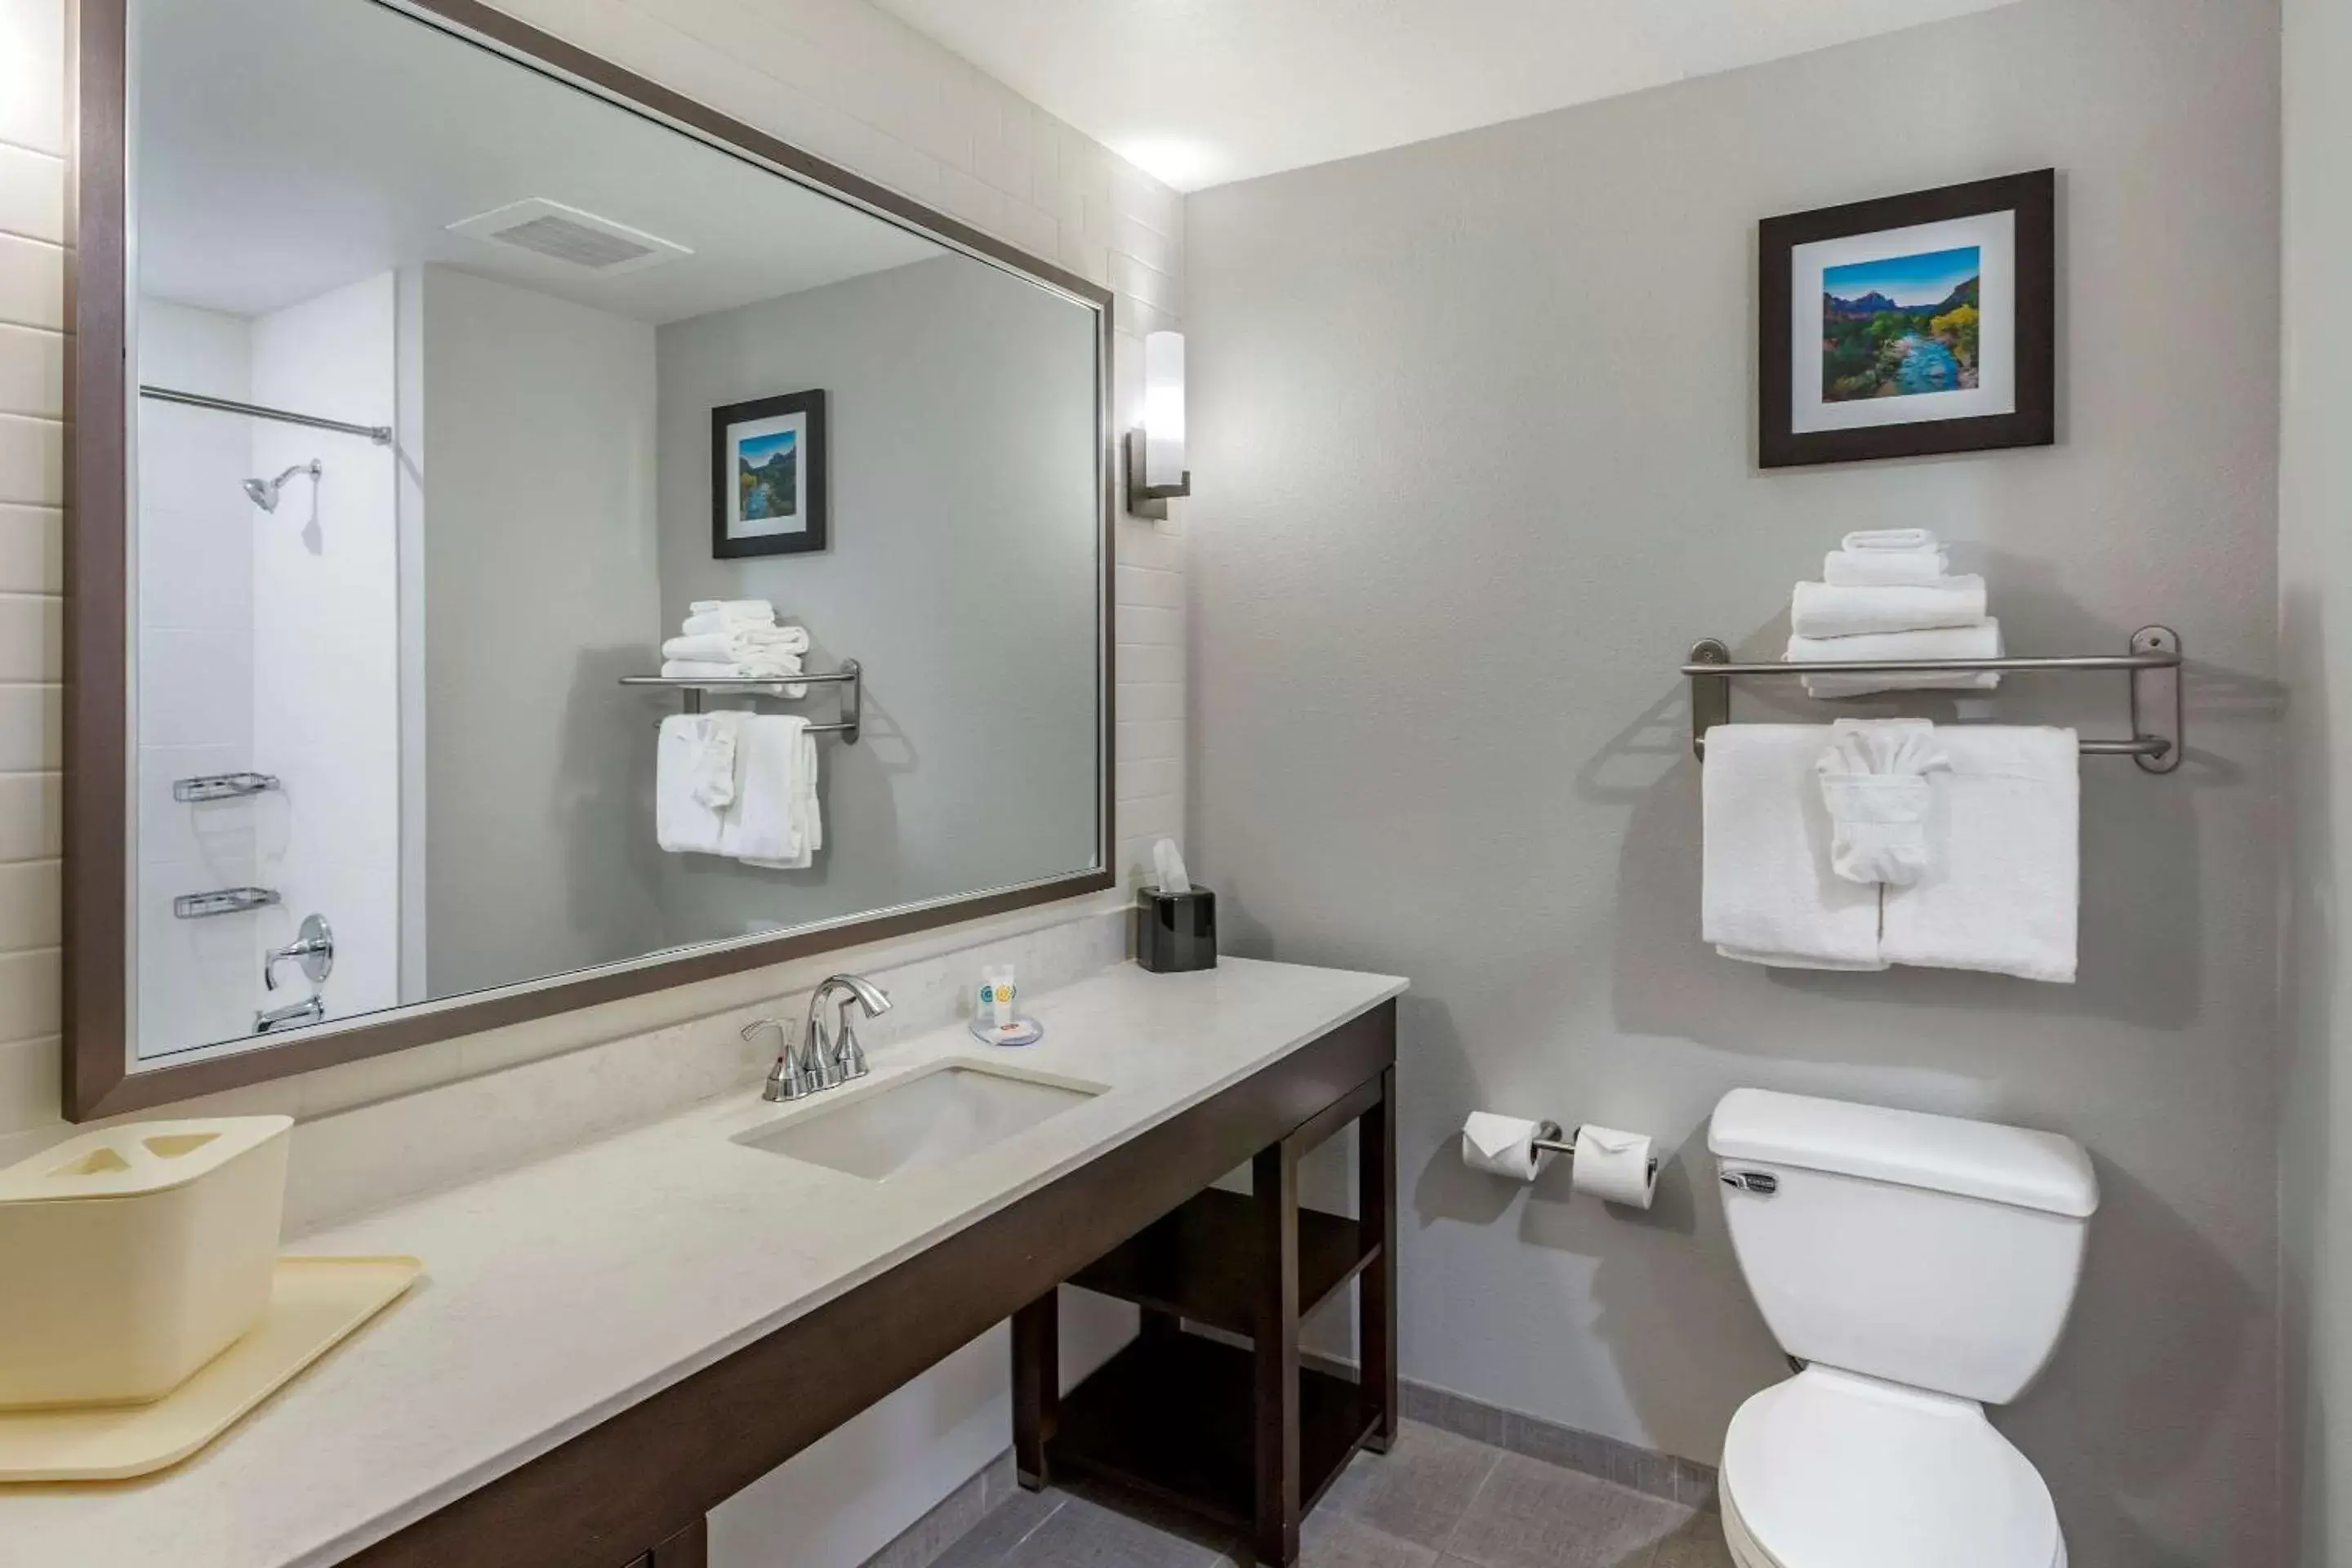 Photo of the whole room, Bathroom in Comfort Inn & Suites Salt Lake City Airport